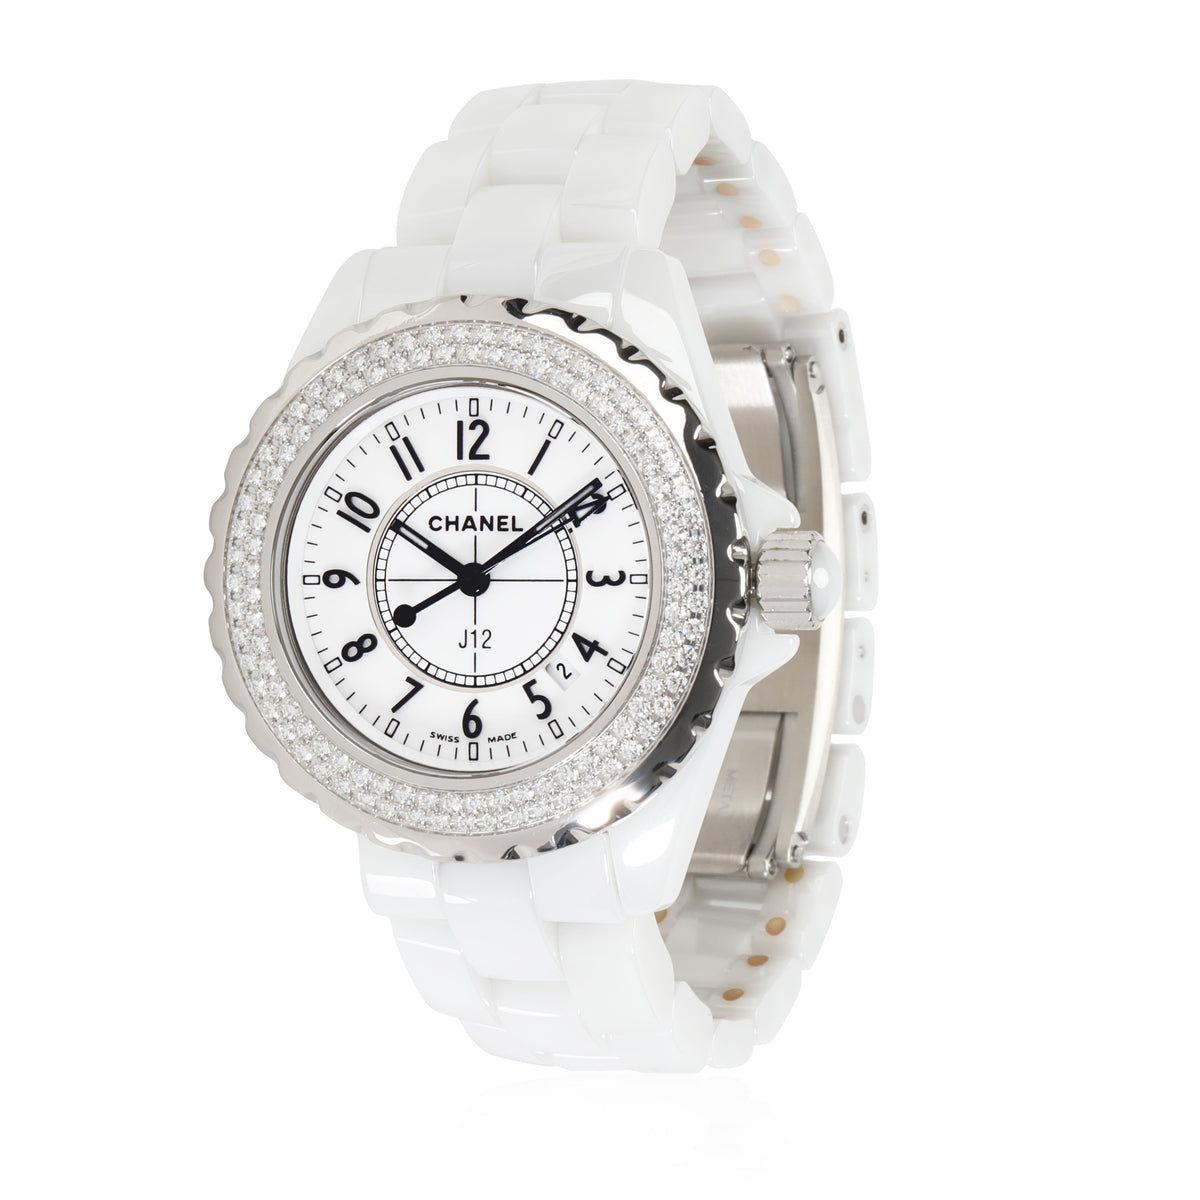 Estate Chanel Stainless Steel and White Ceramic J12 Watch with Diamond   Tenenbaum Jewelers